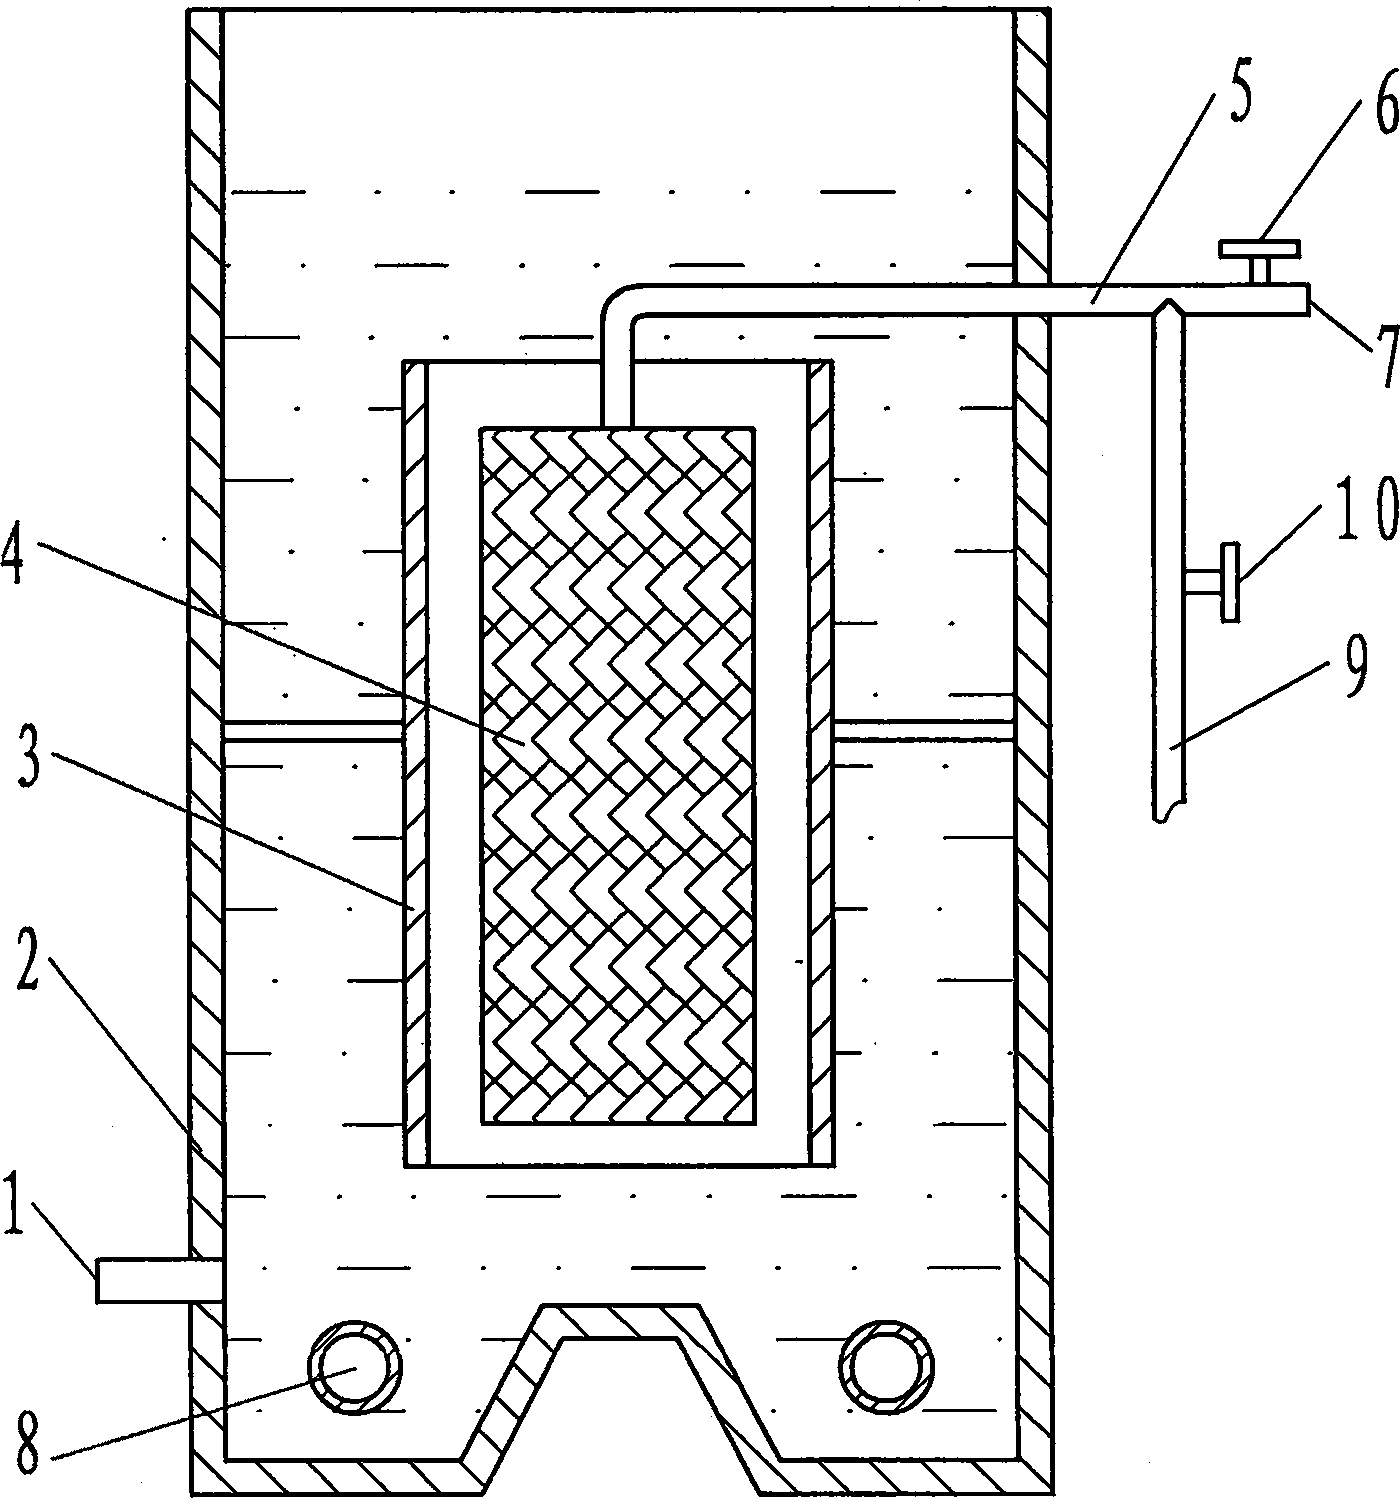 Internal circulation dynamic membrane bioreactor